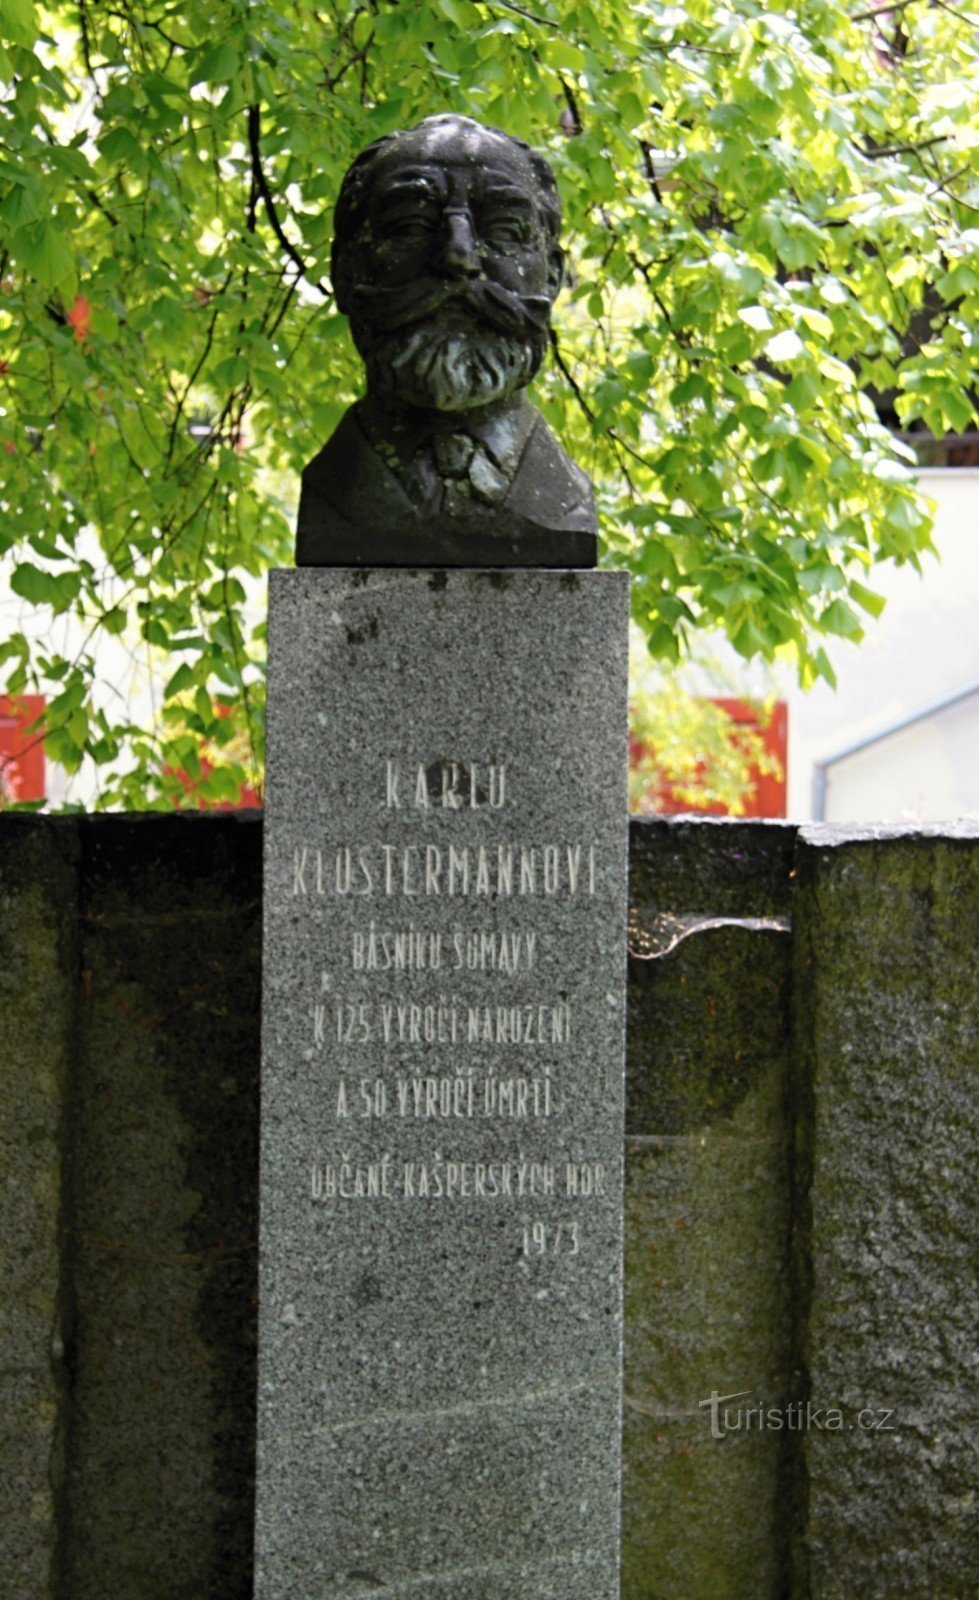 Пам'ятник Карелу Клострманну